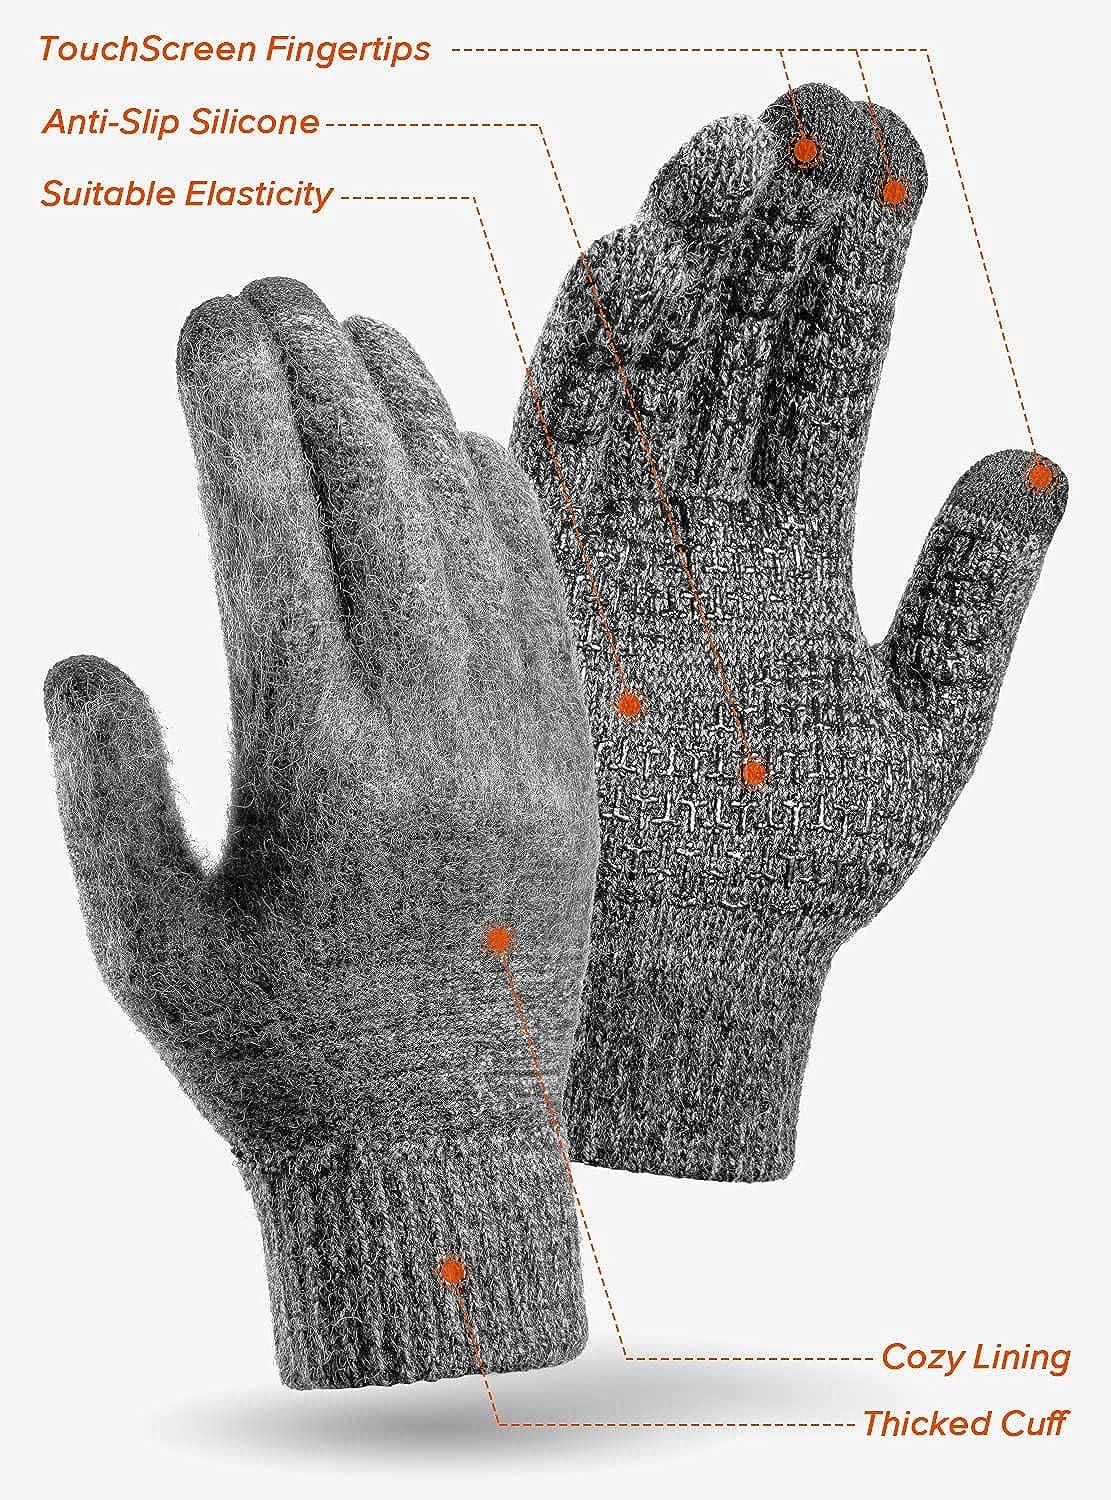 Ladies Multi-Purpose Athletic Gloves, Touch Screen, Anti-Slip Grip